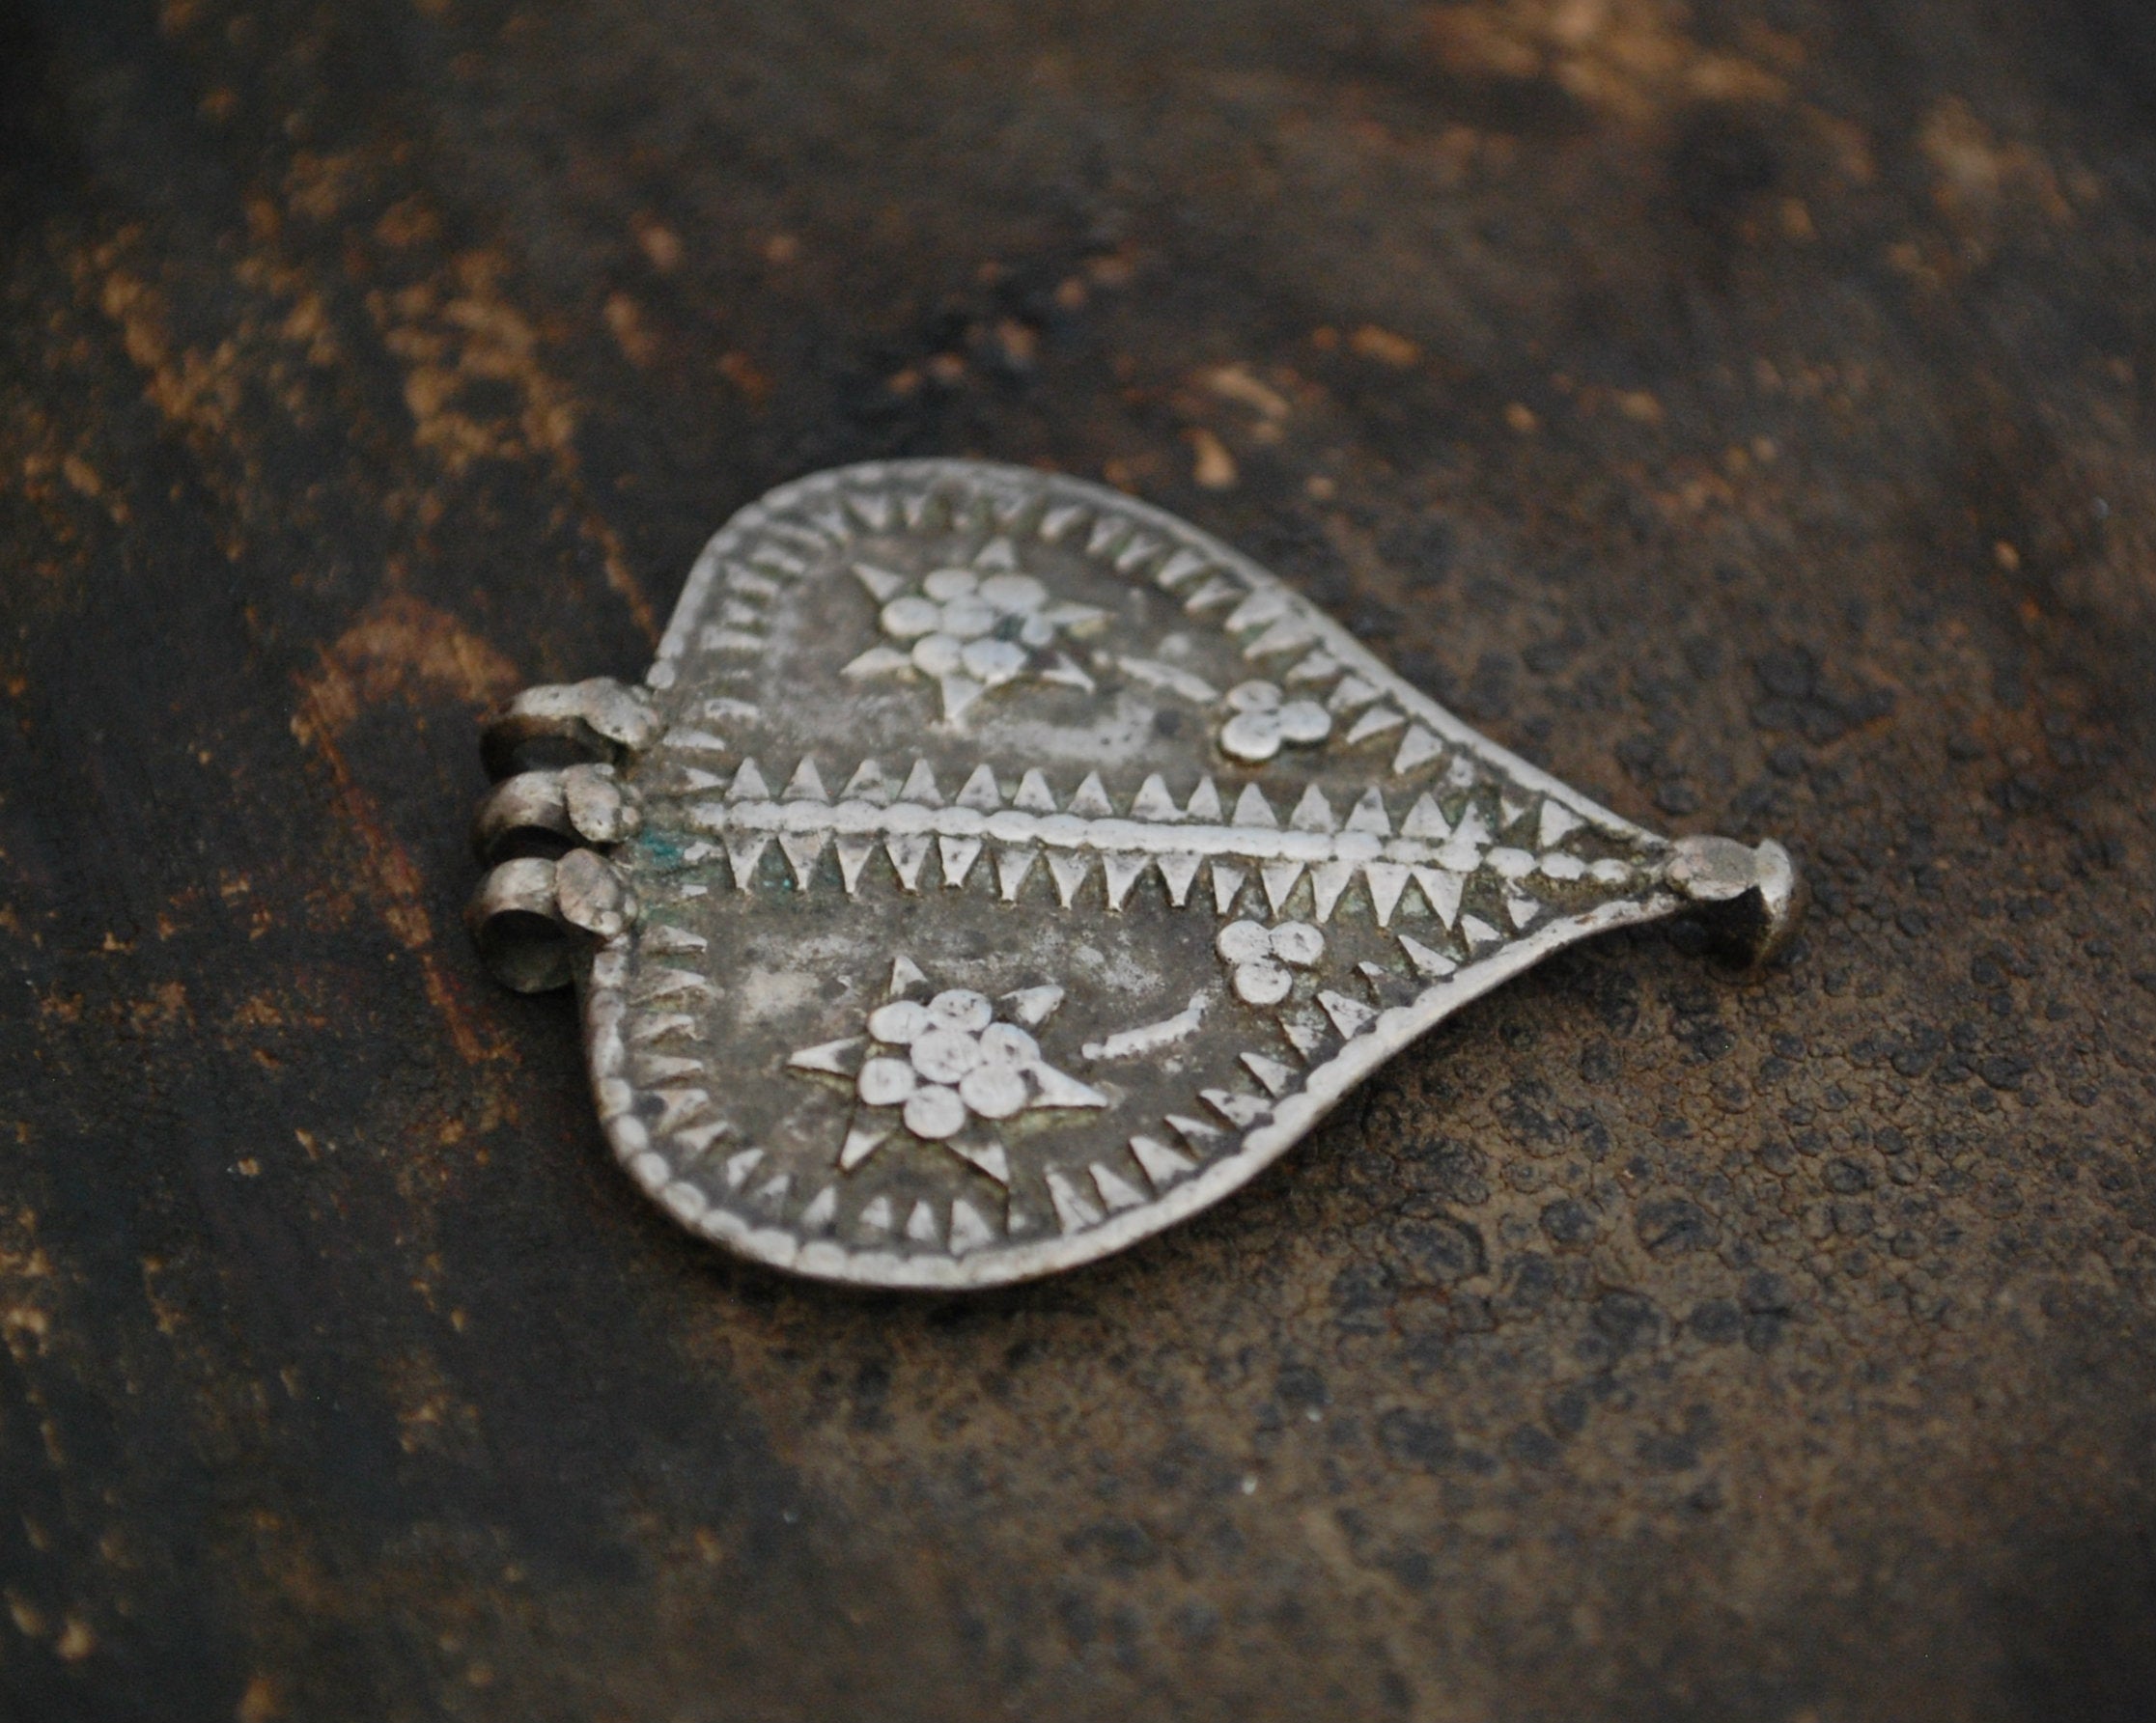 Old Rajasthani Silver Pendant